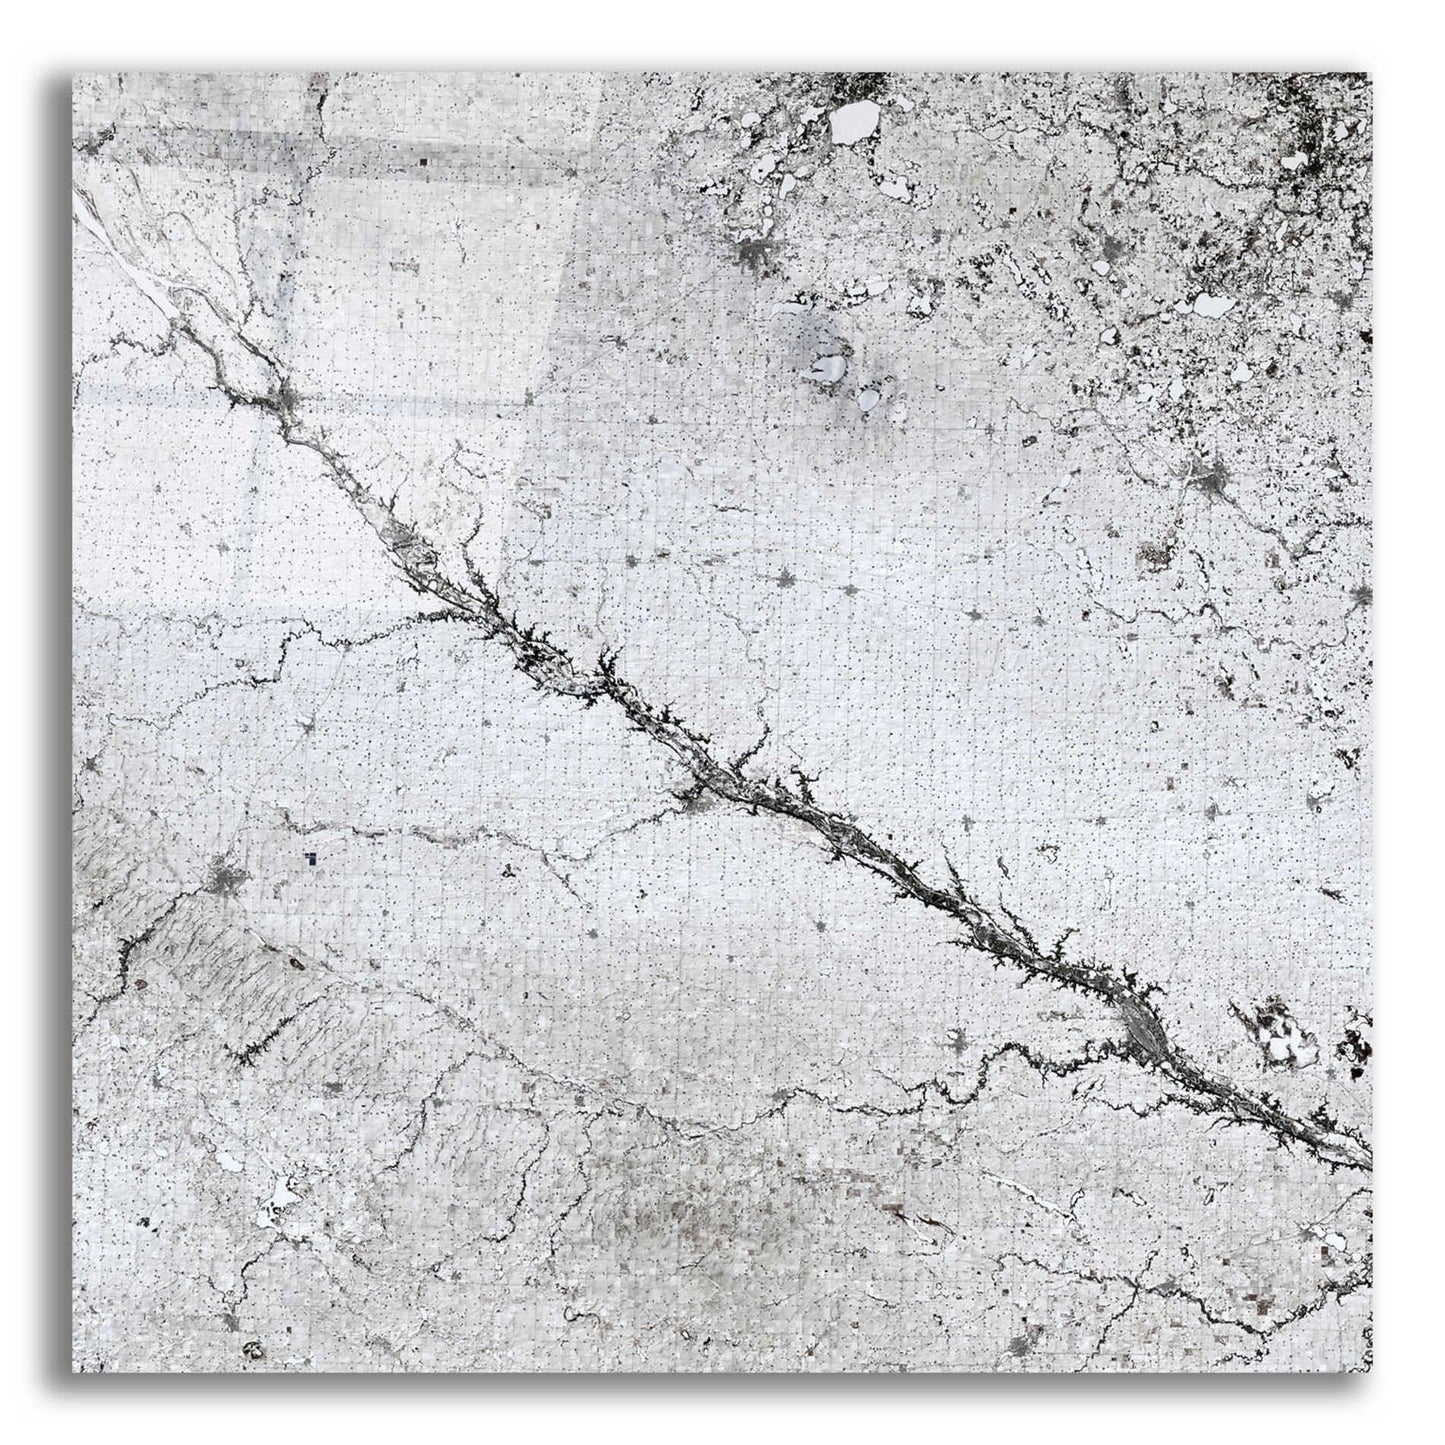 Epic Art 'Earth as Art: Bleak Midwinter,' Acrylic Glass Wall Art,12x12x1.1x0,18x18x1.1x0,26x26x1.74x0,37x37x1.74x0